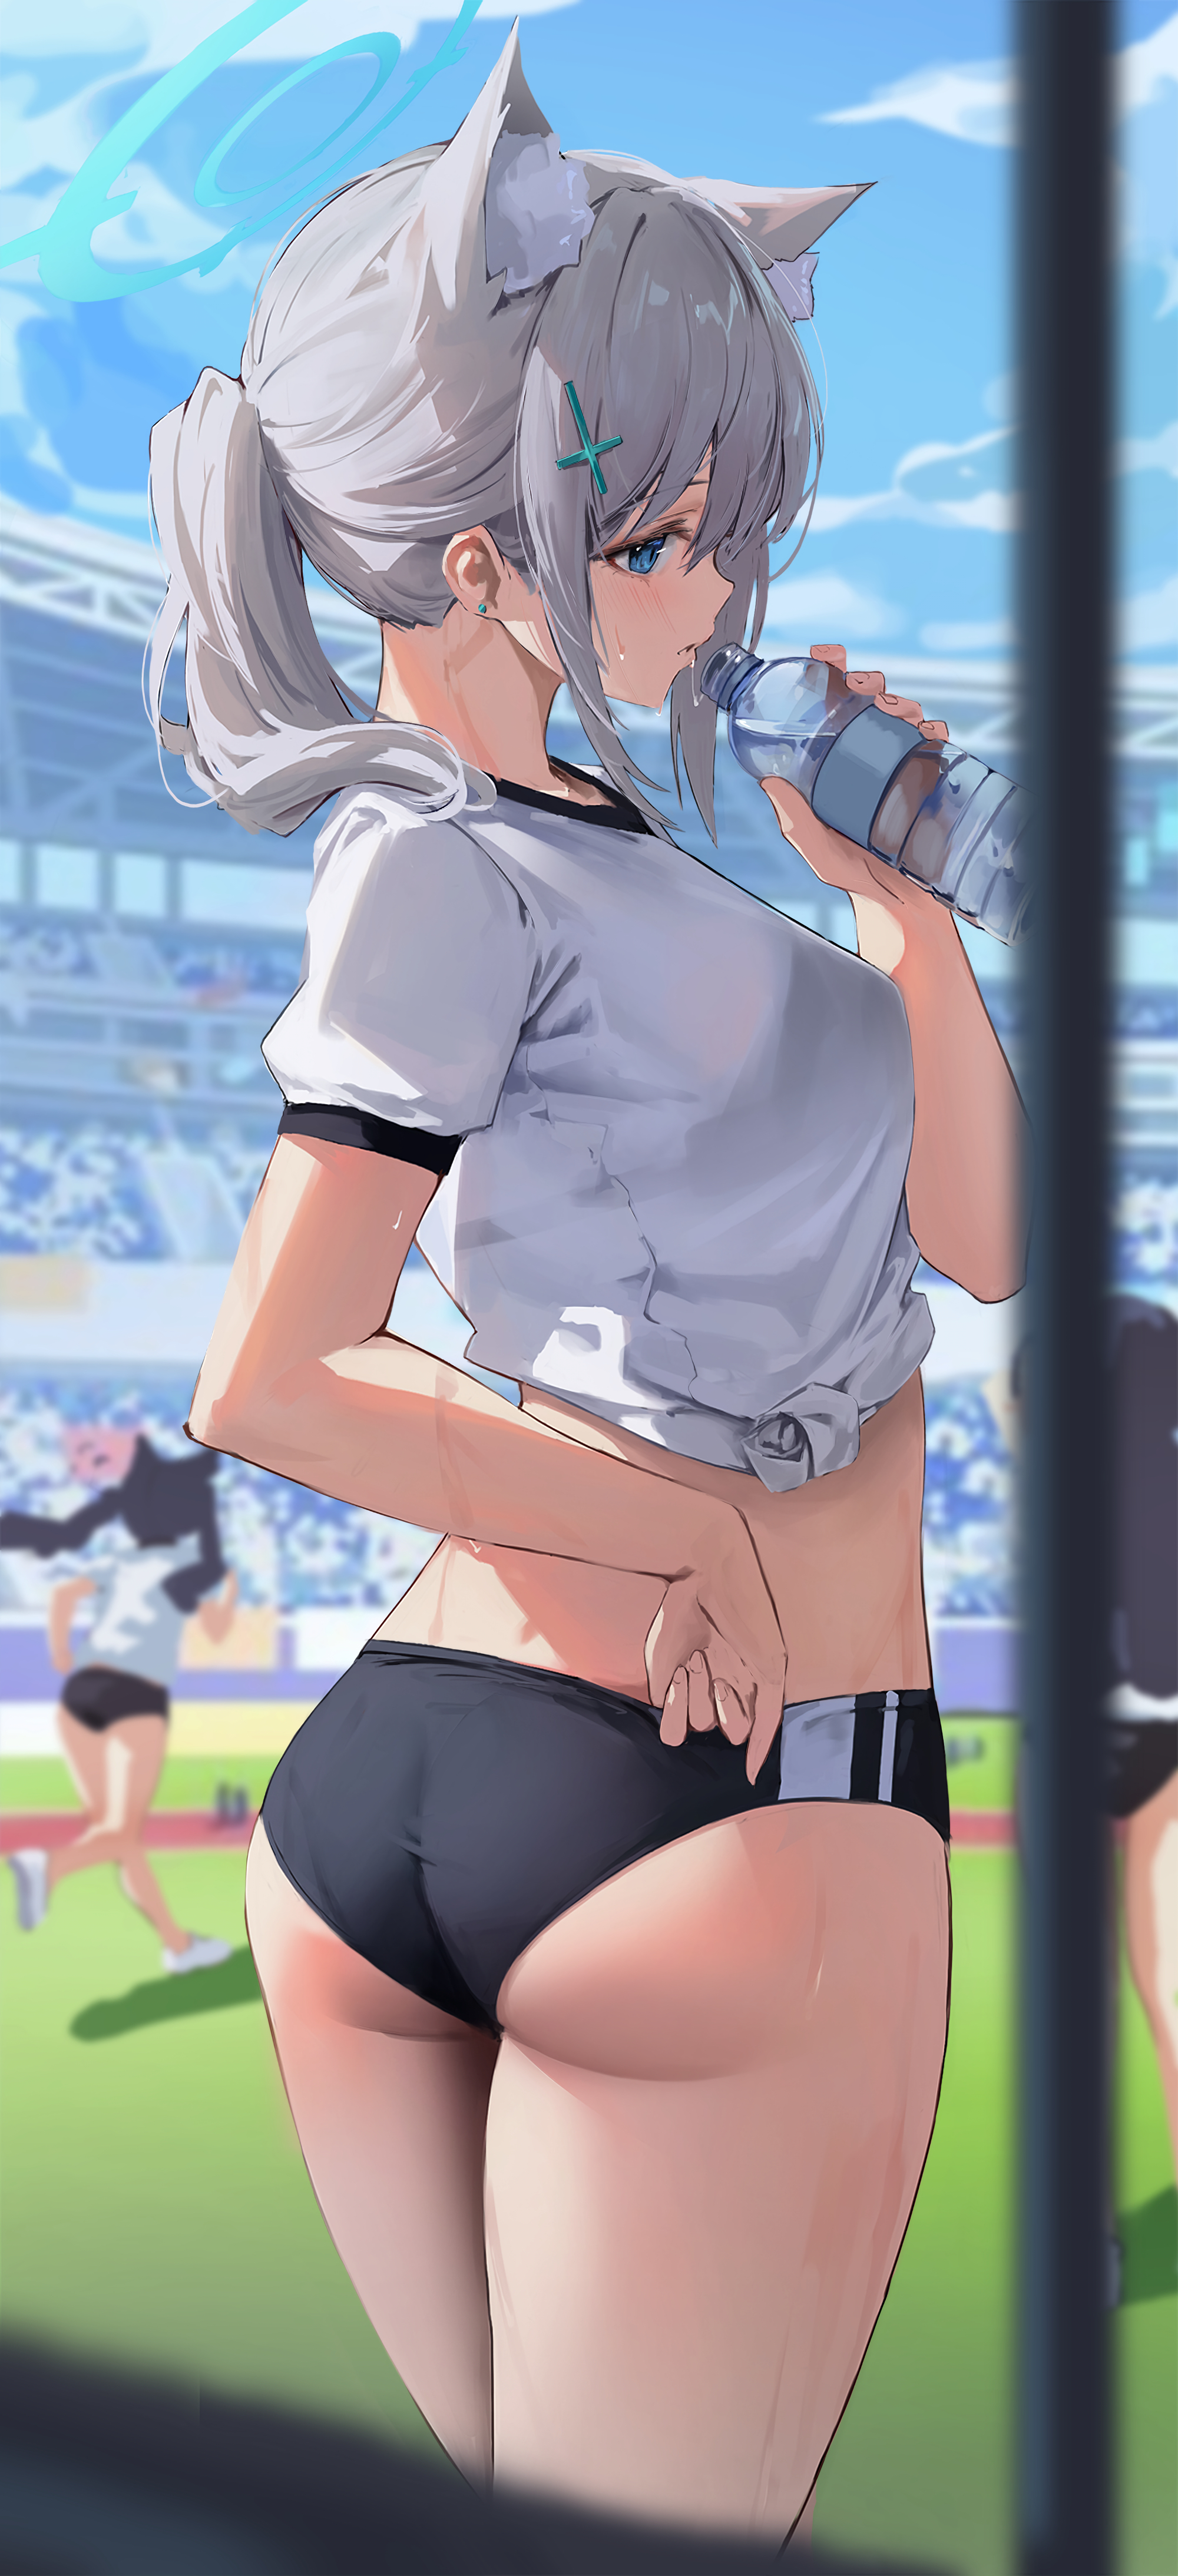 Anime 2000x4374 anime girls anime games ass short shorts water bottle ponytail portrait display fox girl fox ears